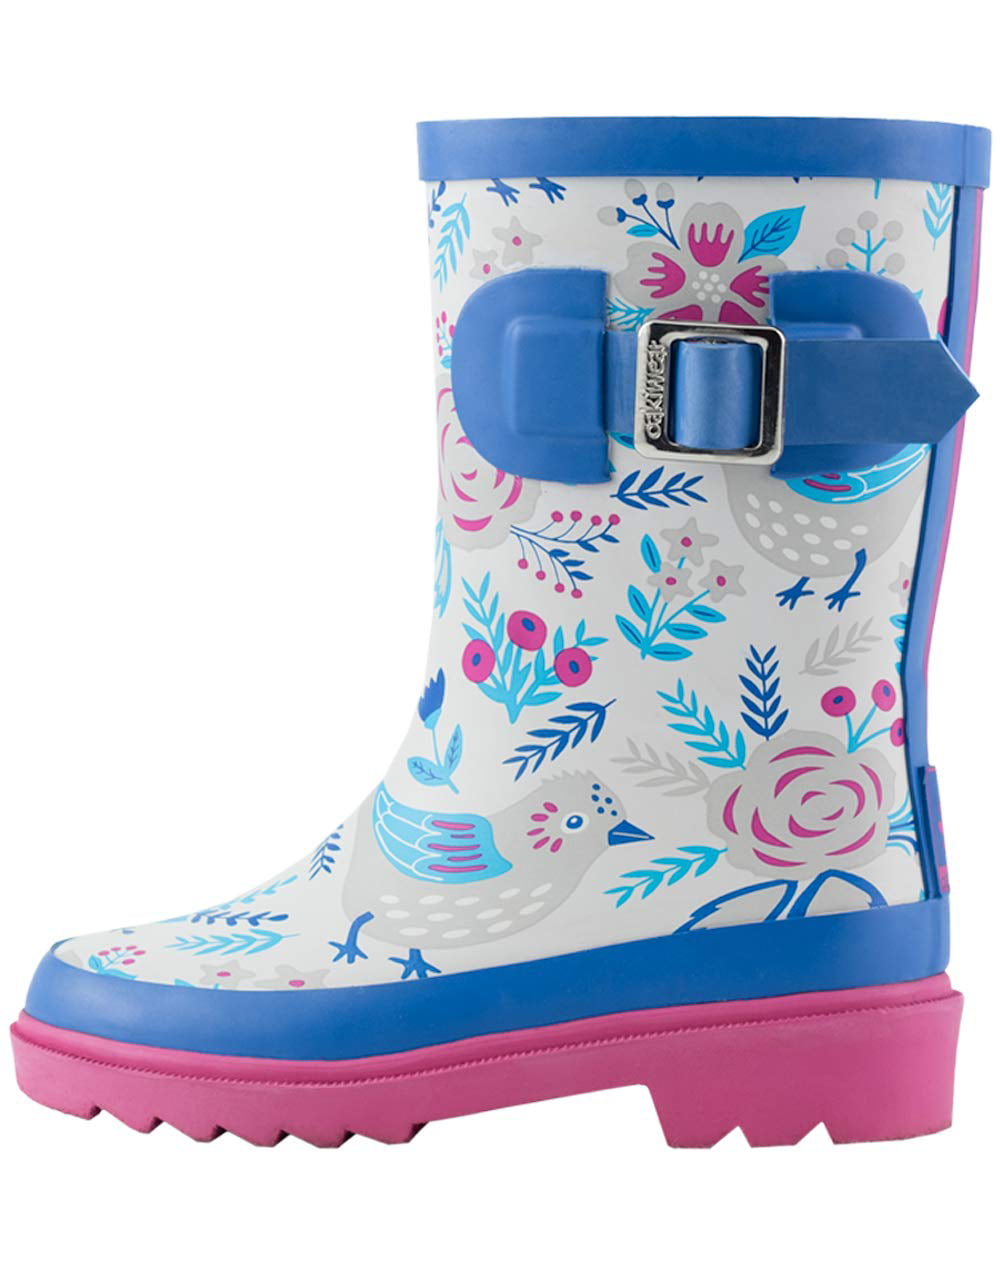 OAKI Kids Rubber Rain Boots with Buckle 